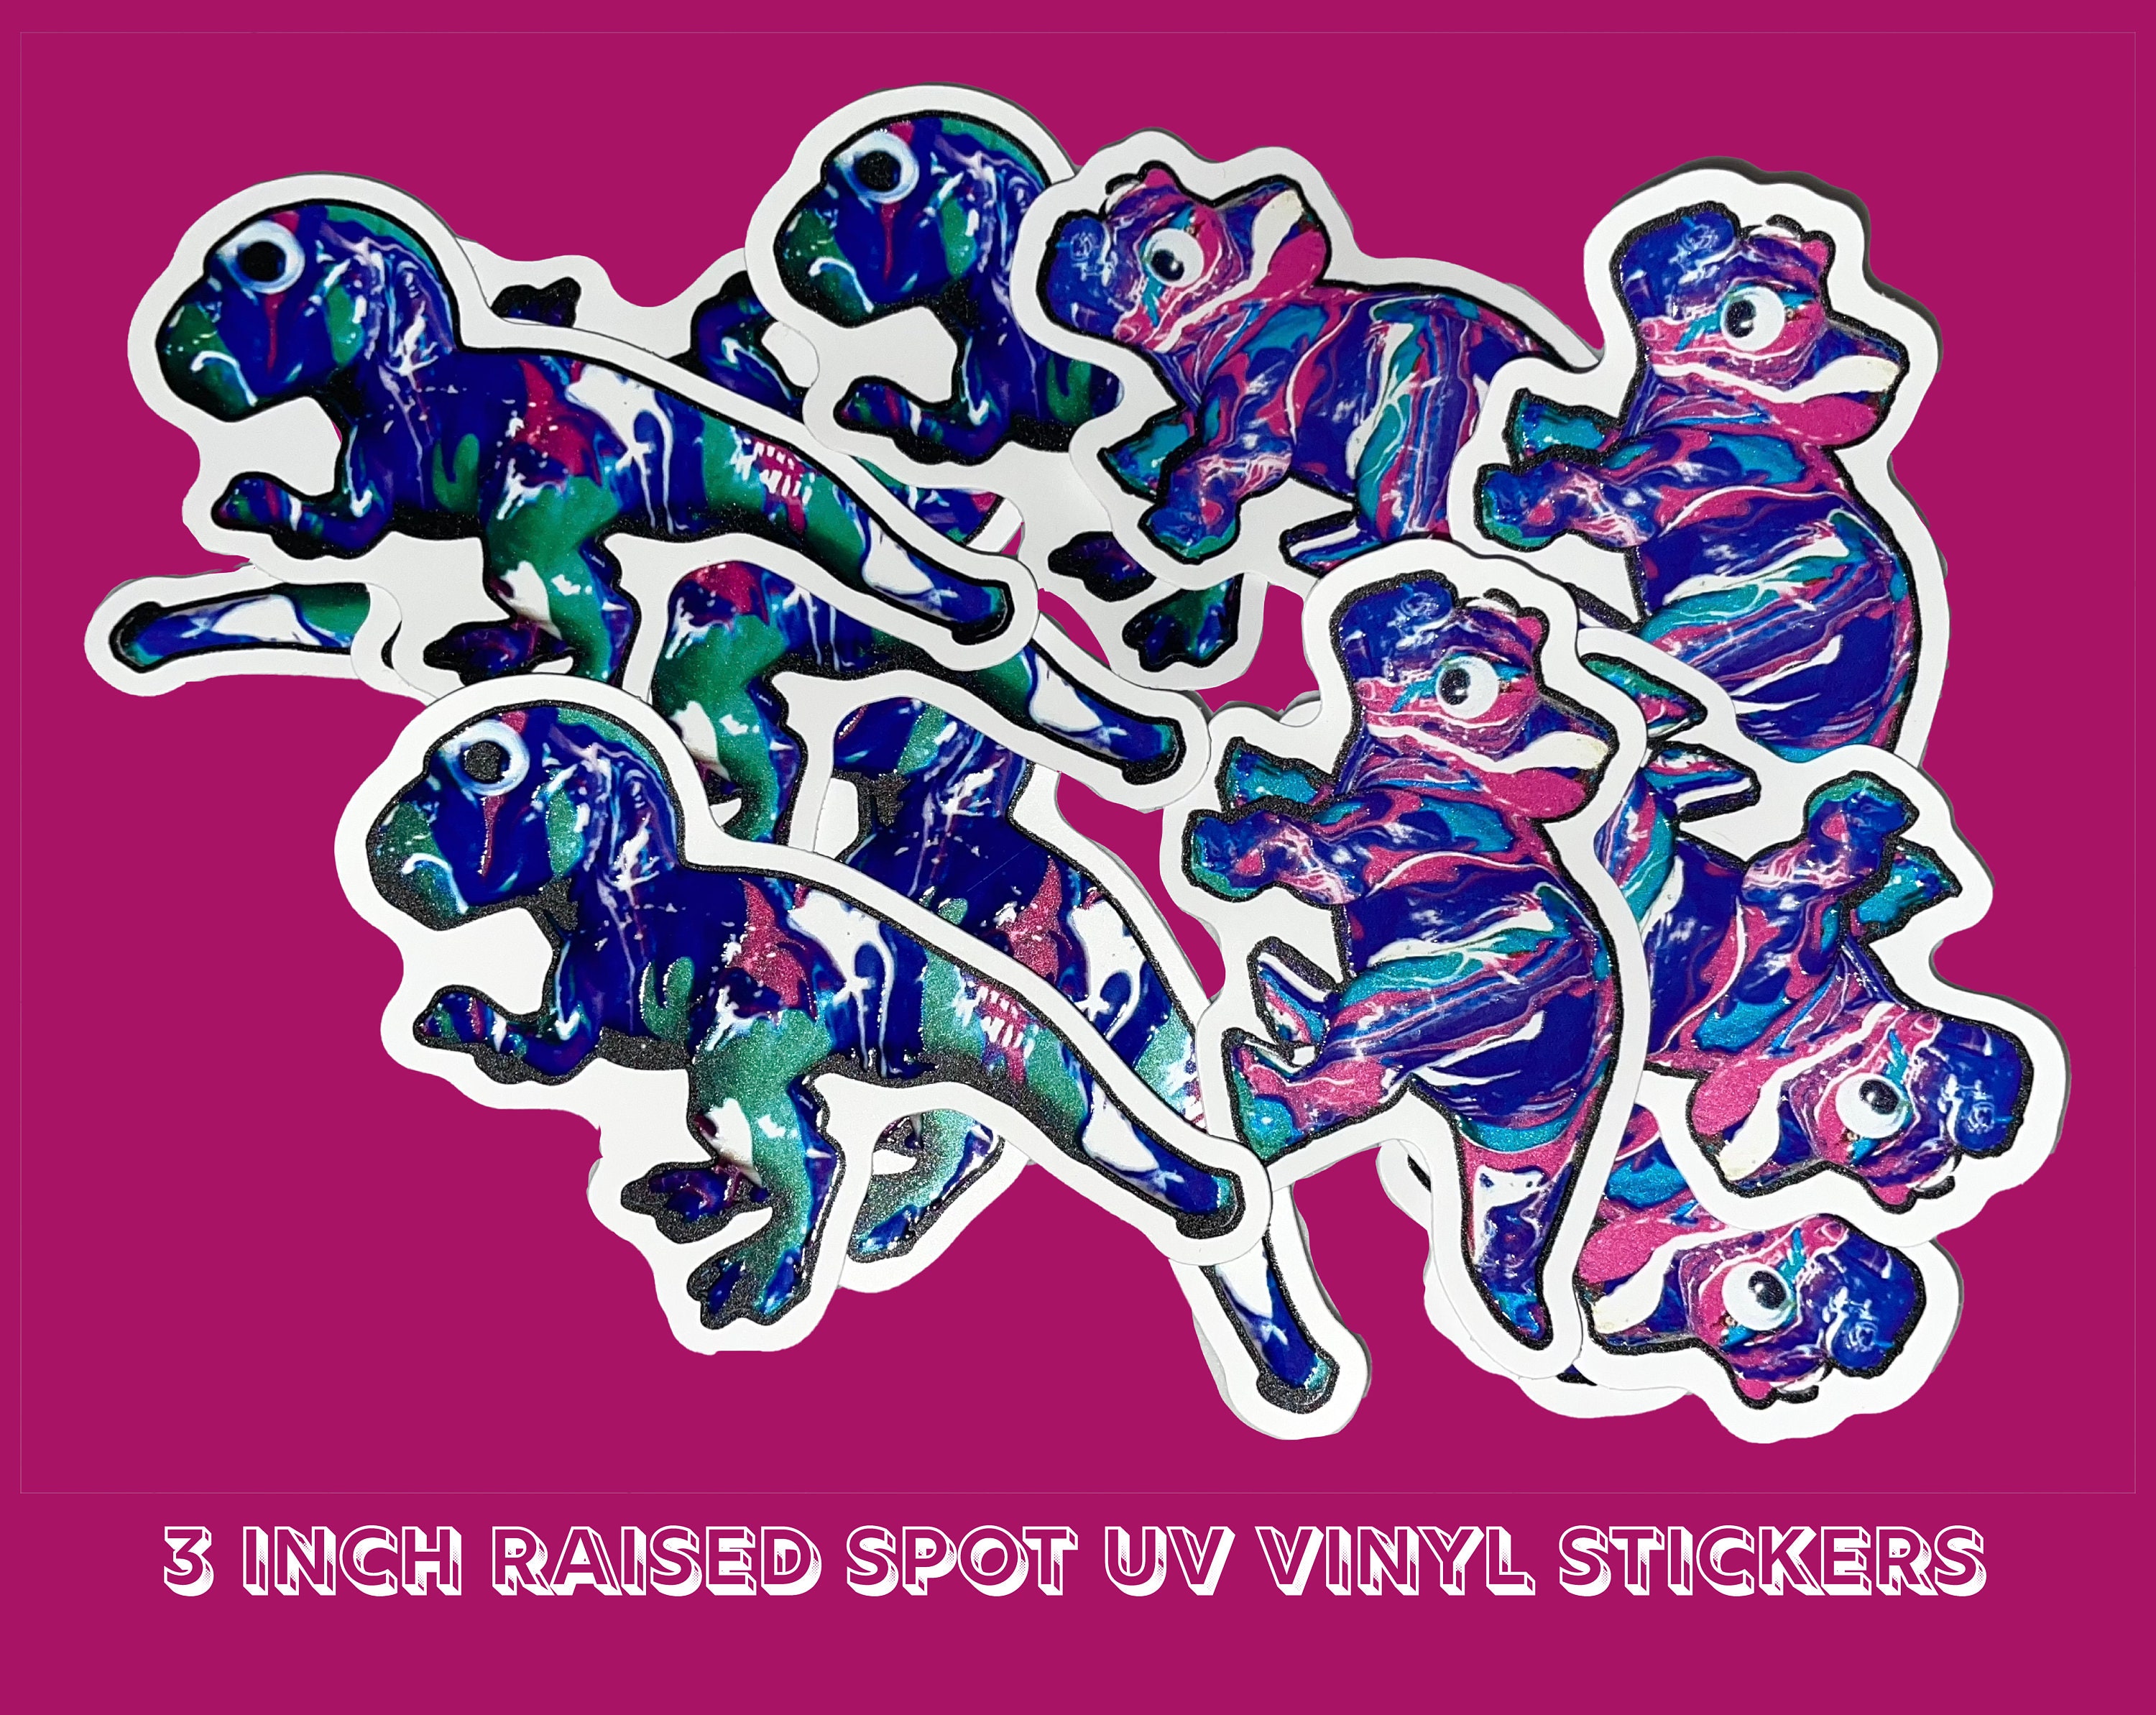 Custom 3d Logo Metal Transfer Stickers, UV Adhesive Sticker